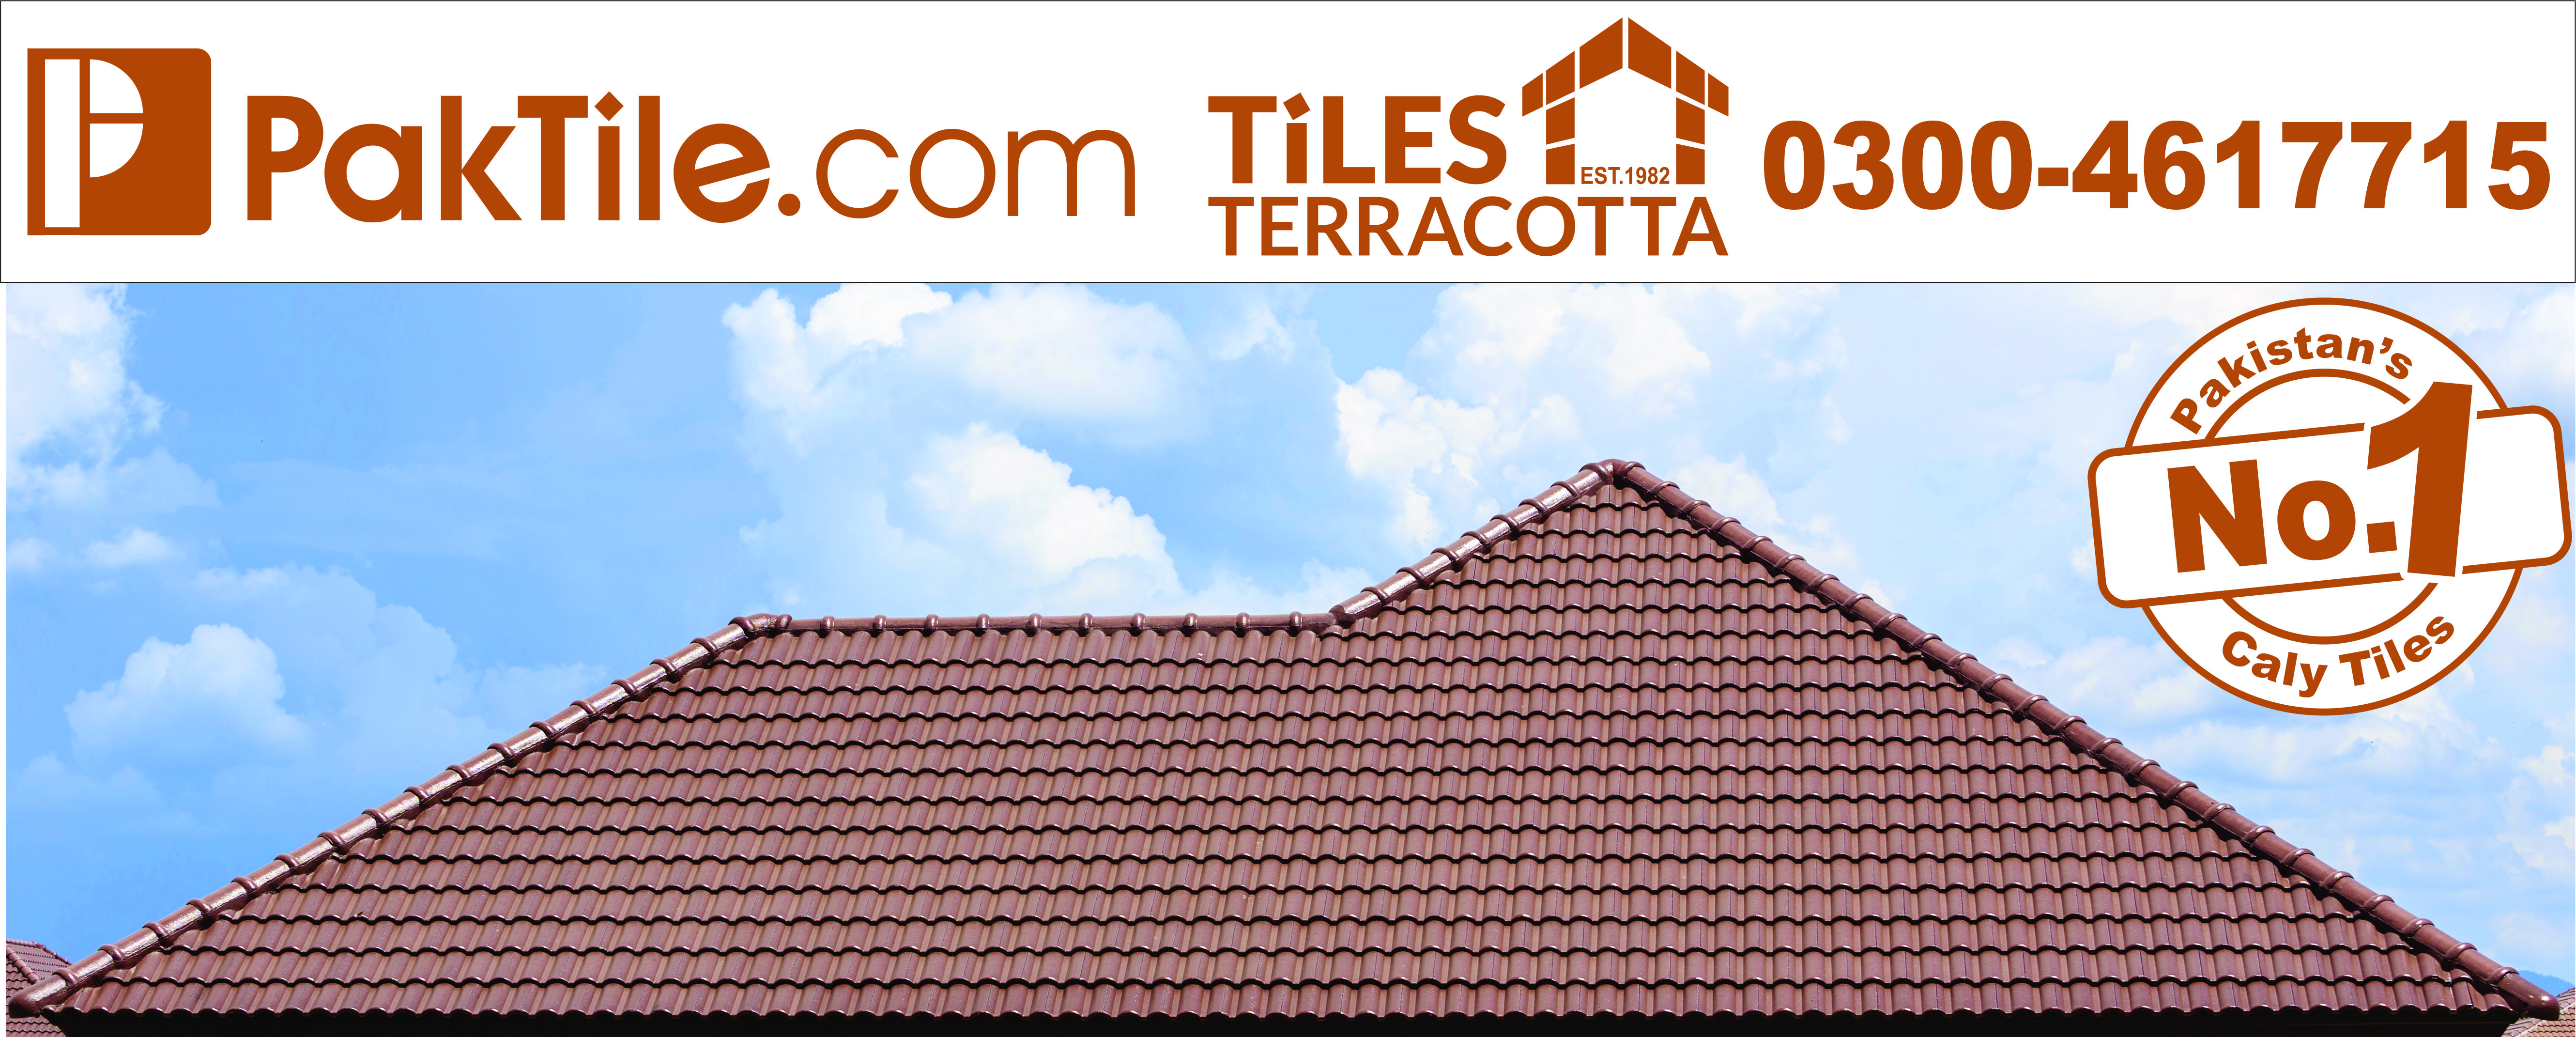 5 Pak clay tiles lahore roofing tiles terracotta roof tiles colours roof tile designs in karachi images